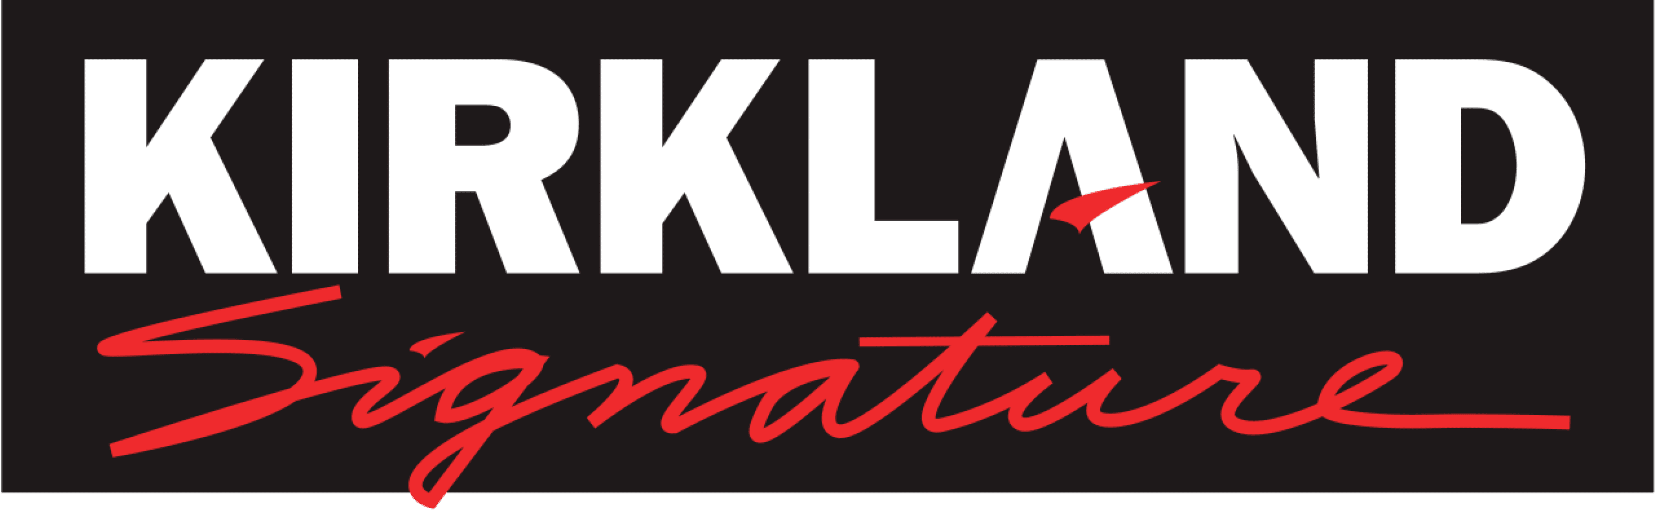 KIRKLAND Signature